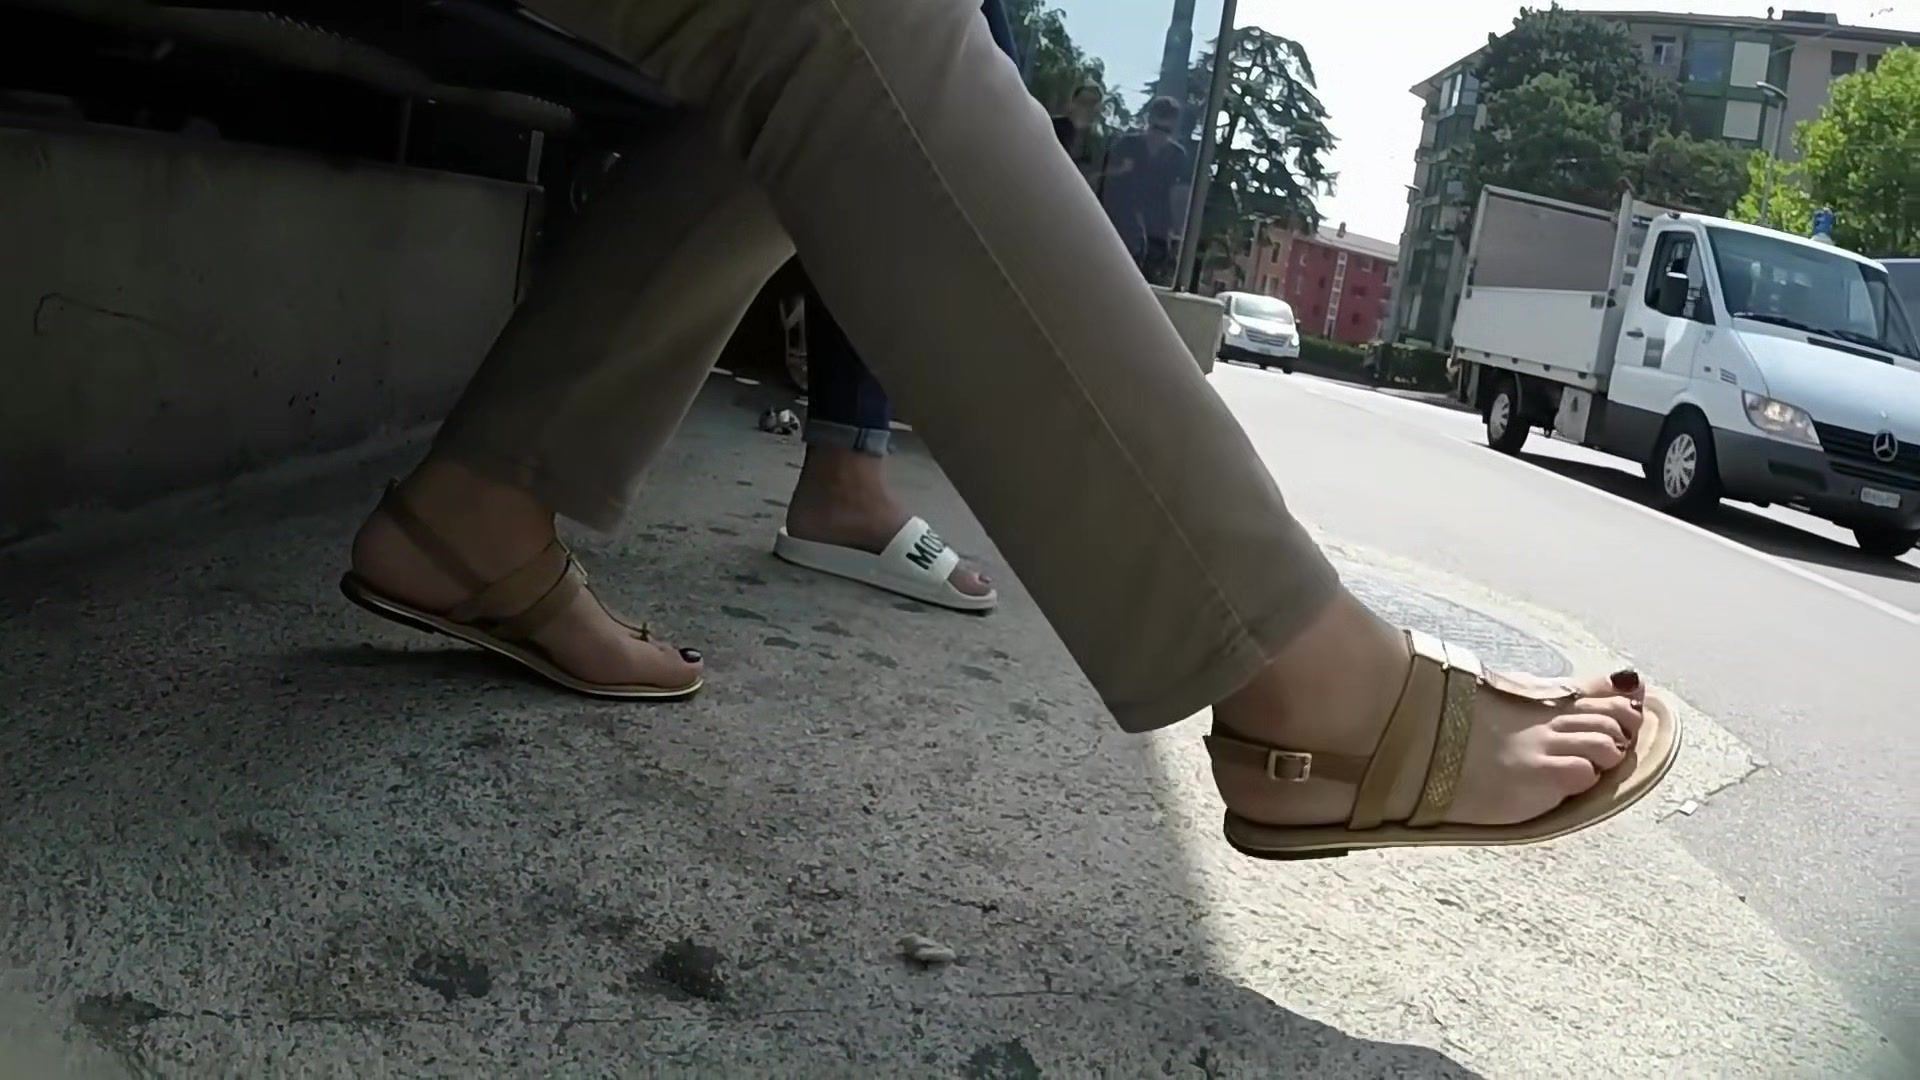 MetArt Sexy Feet In The Street Playing